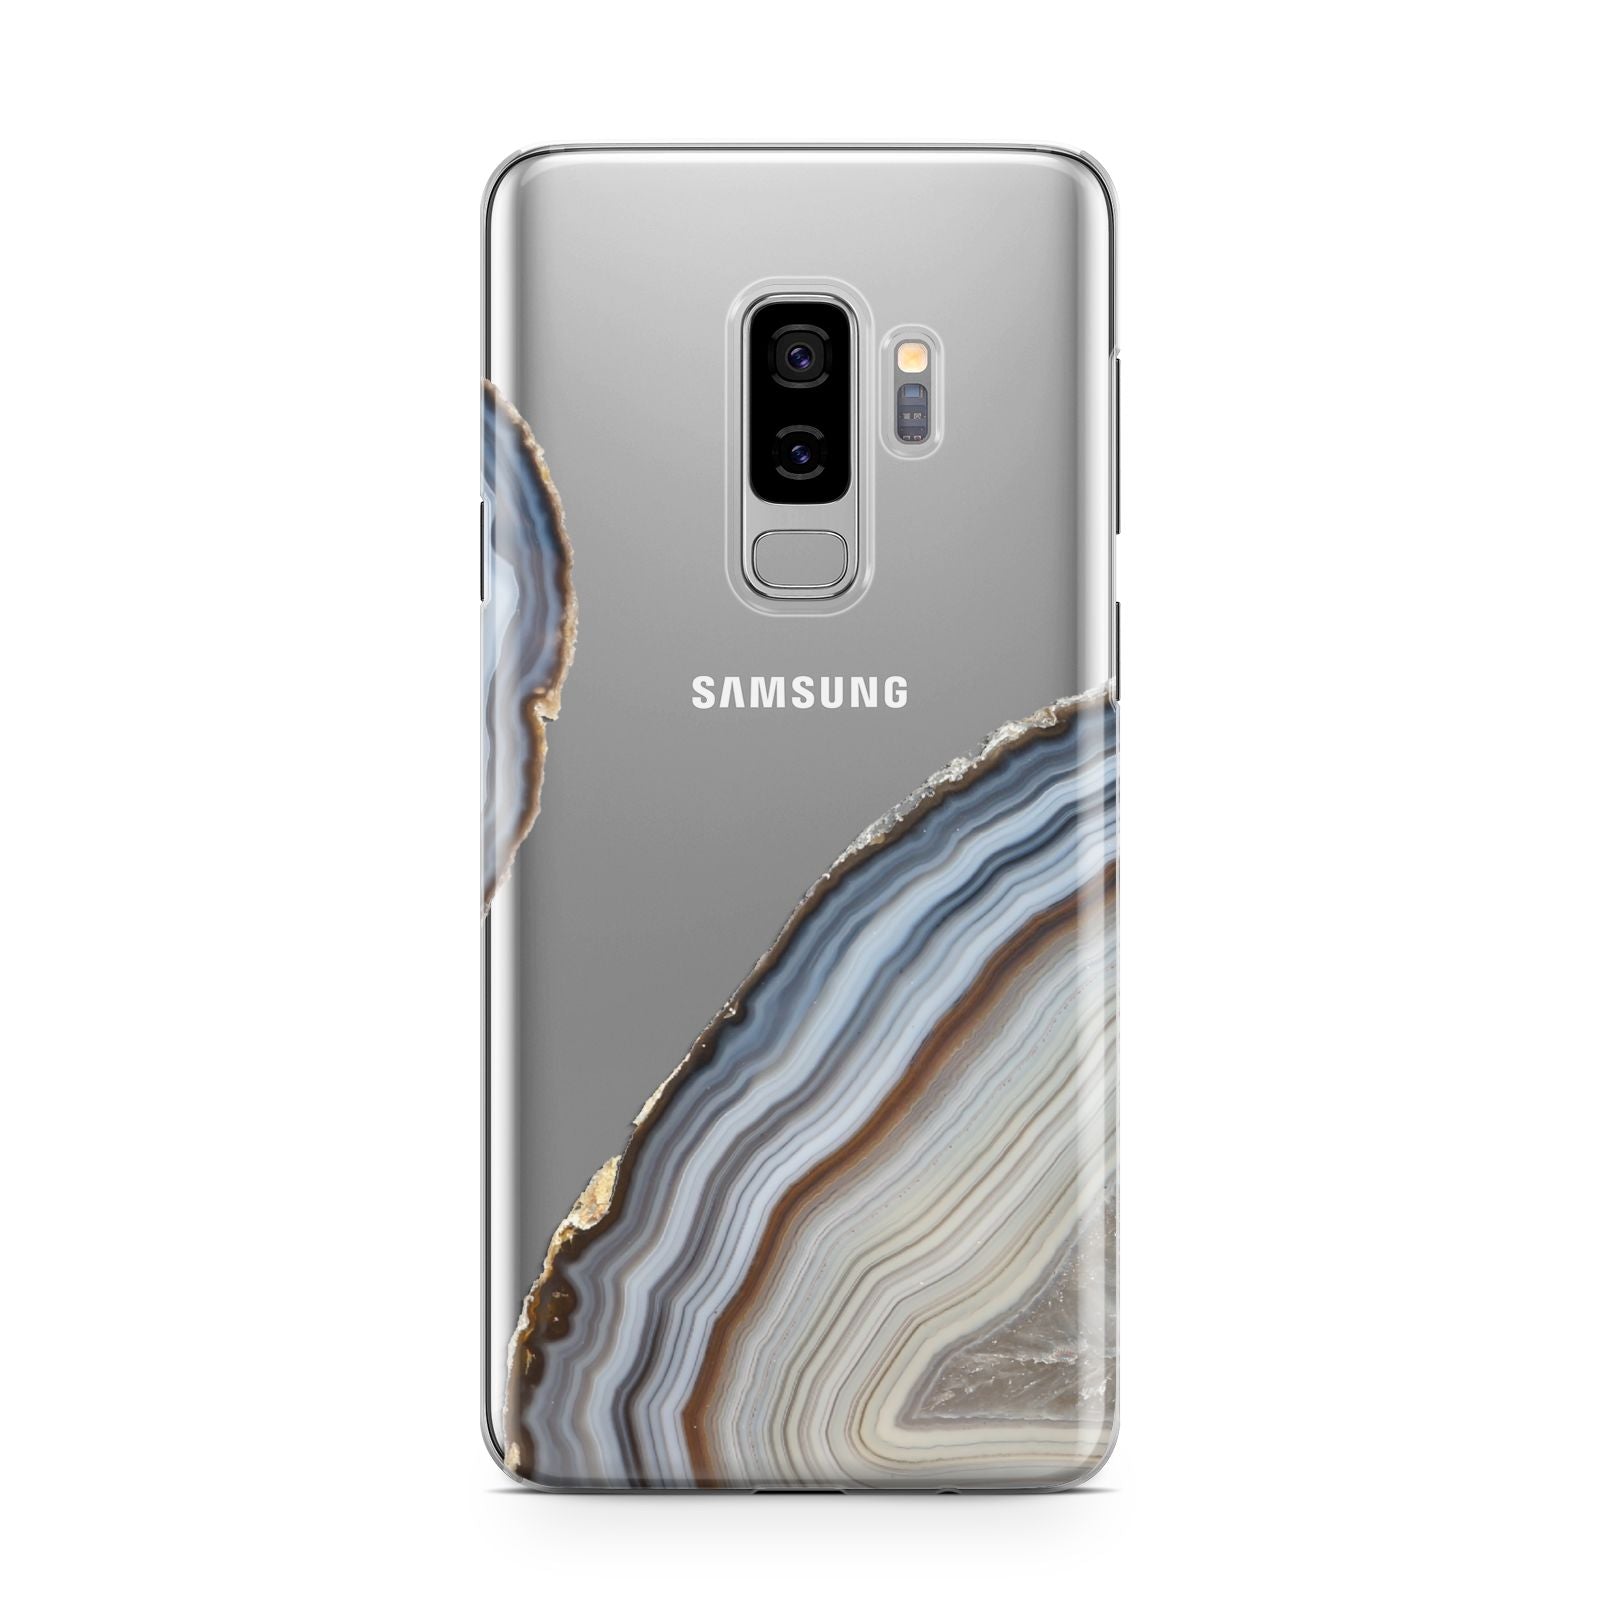 Agate Blue Grey Samsung Galaxy S9 Plus Case on Silver phone